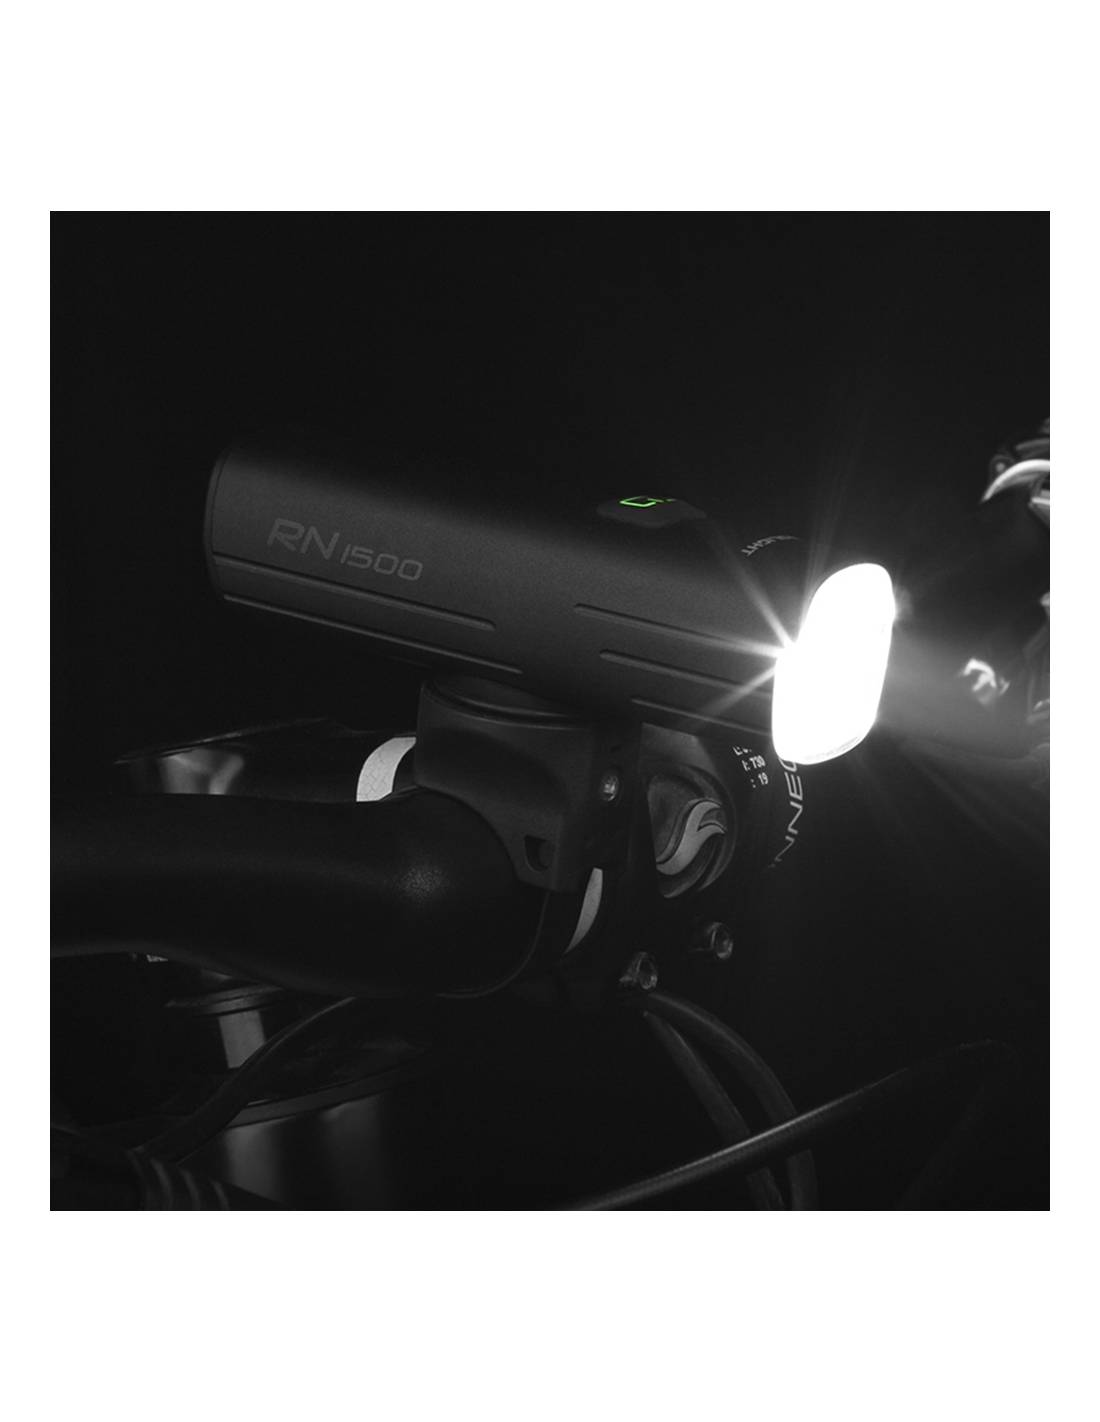 Luz delantera de bicicleta recargable RN 1500 Olight - El Caldén